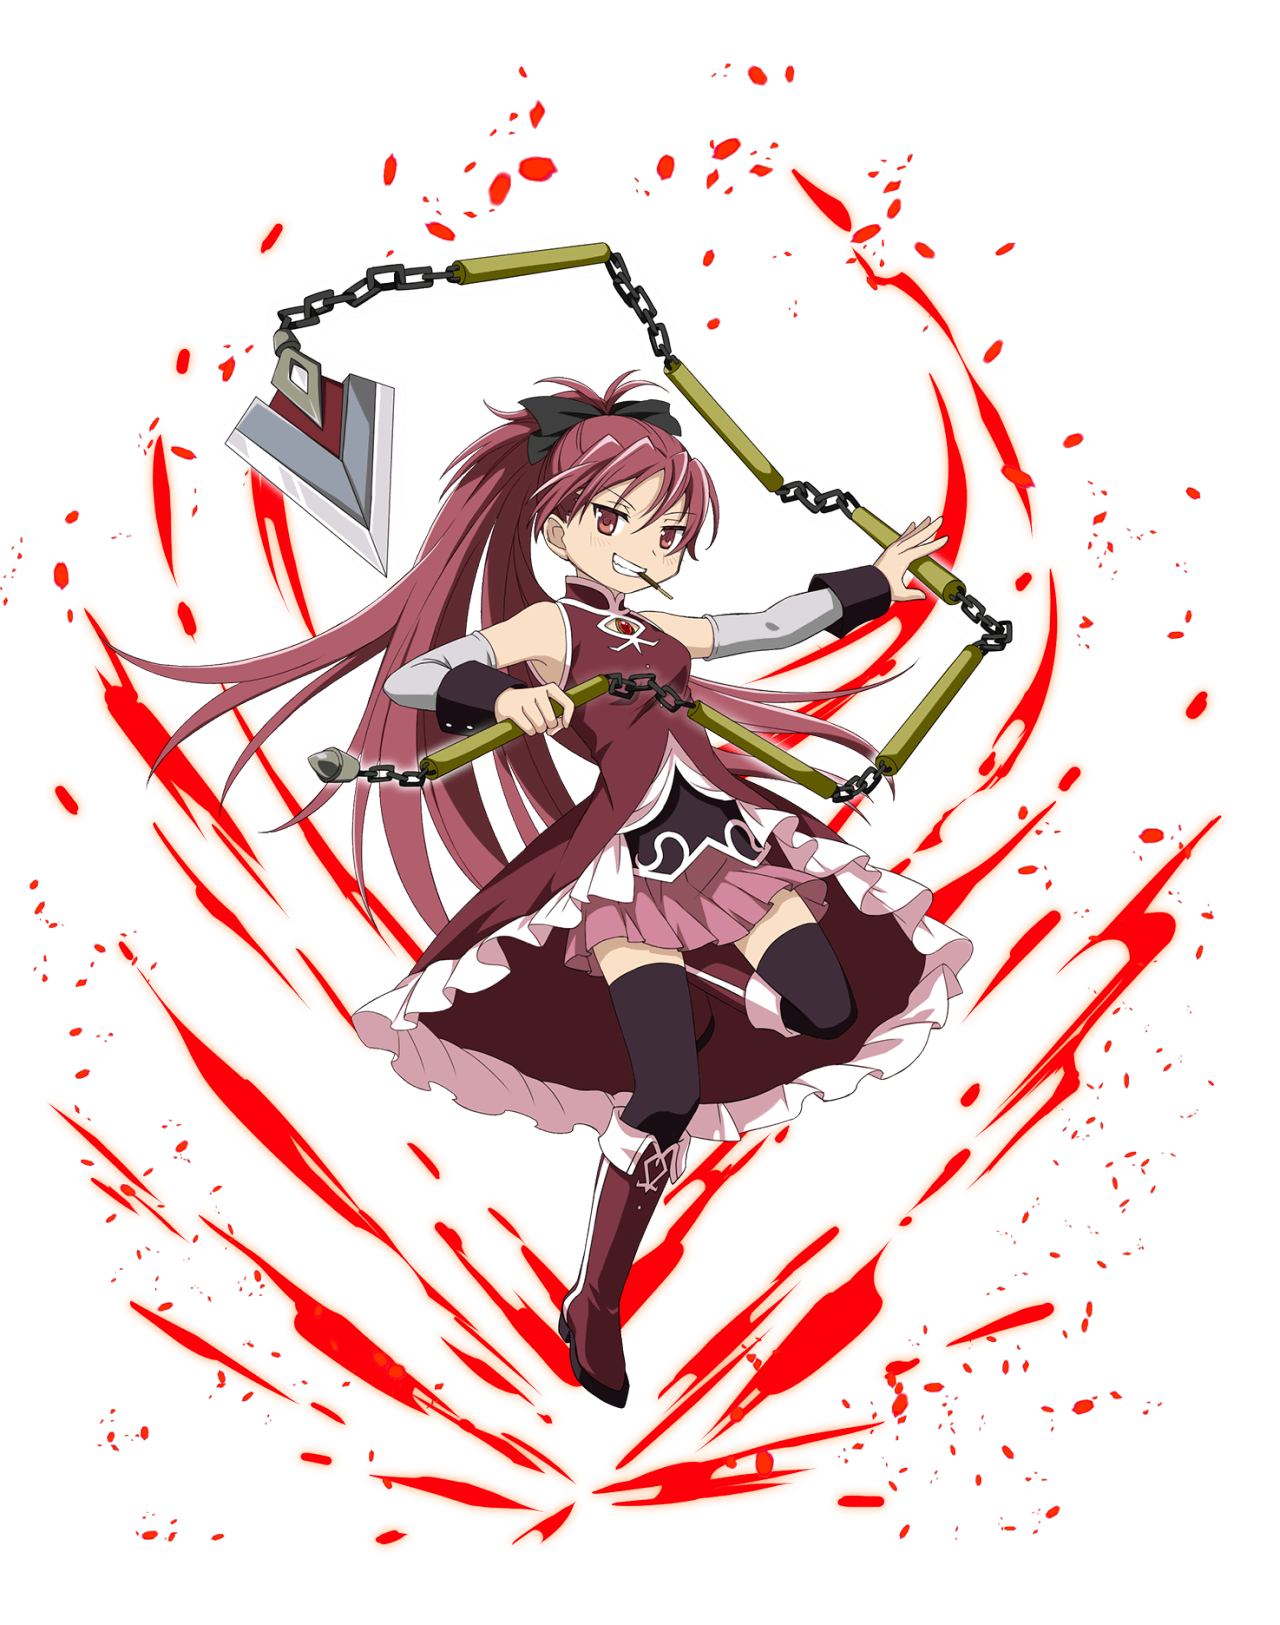 Kyoka (Scarlet Lance) - Kyoka Sakura, Anime Adventures Wiki